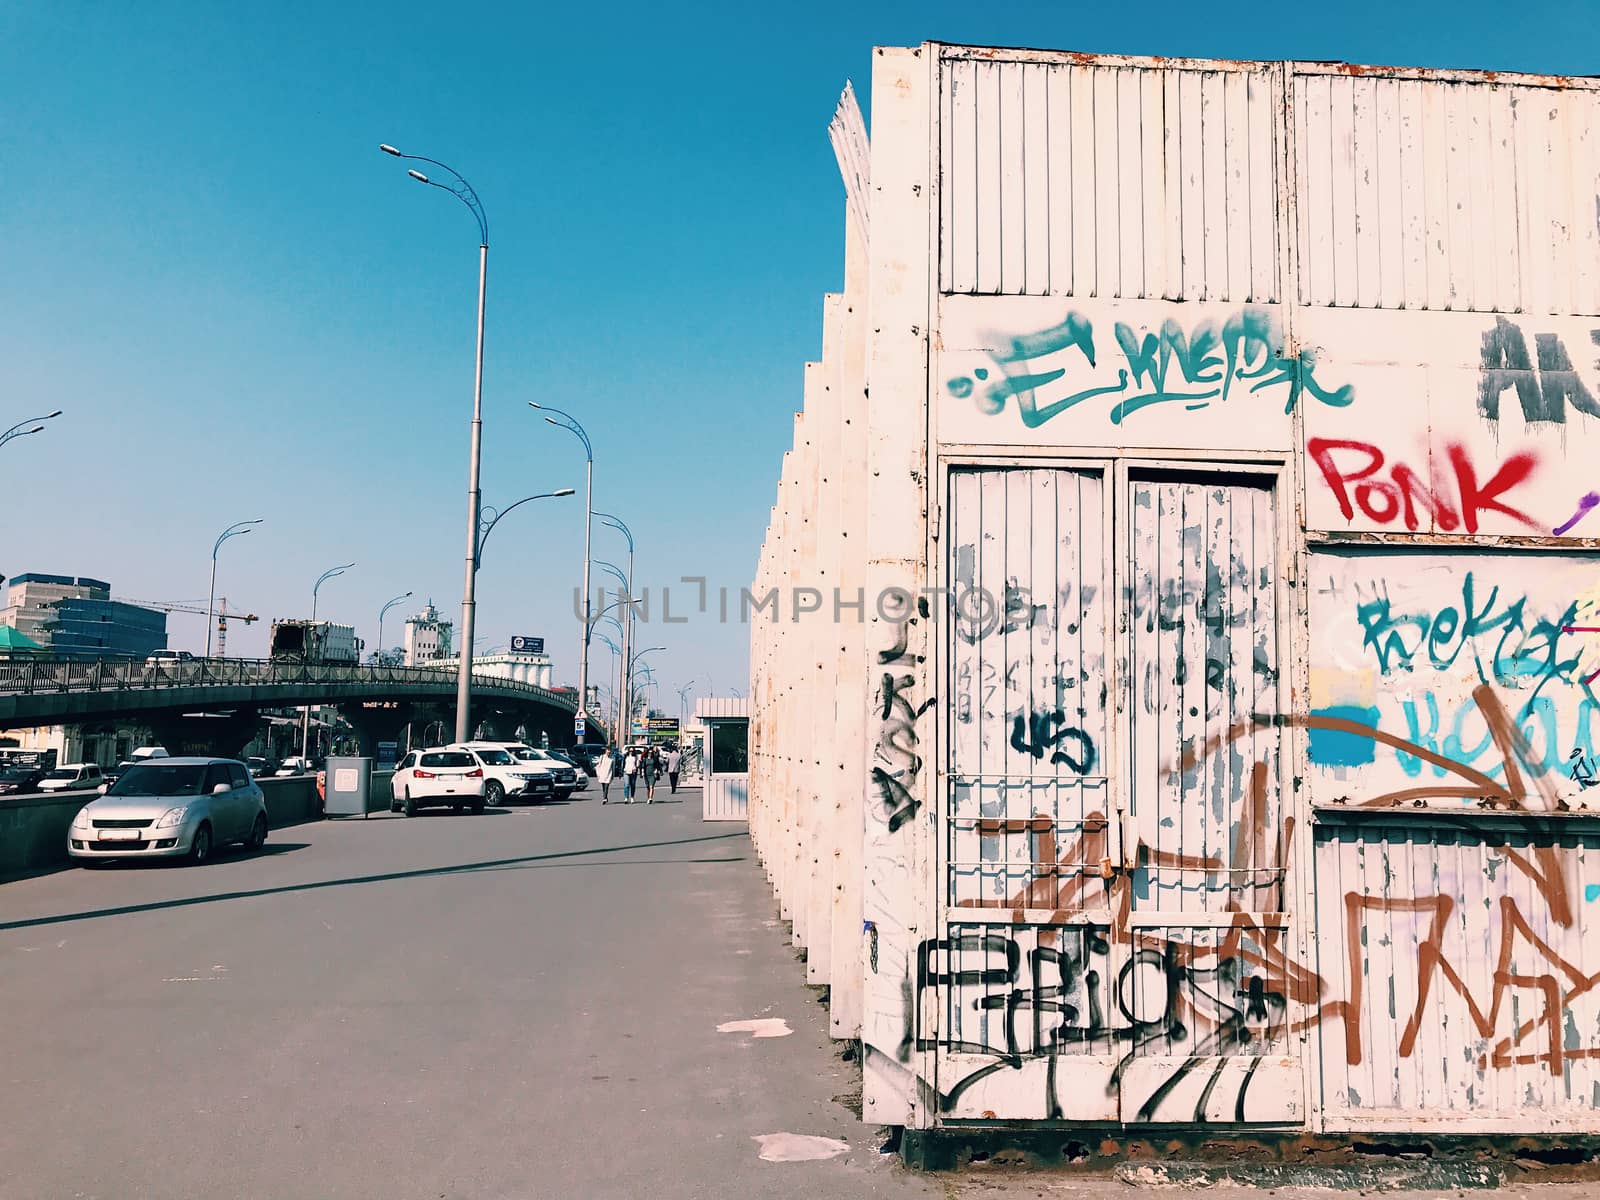 Street art wall, graffiti in a big city on bridge cityscape